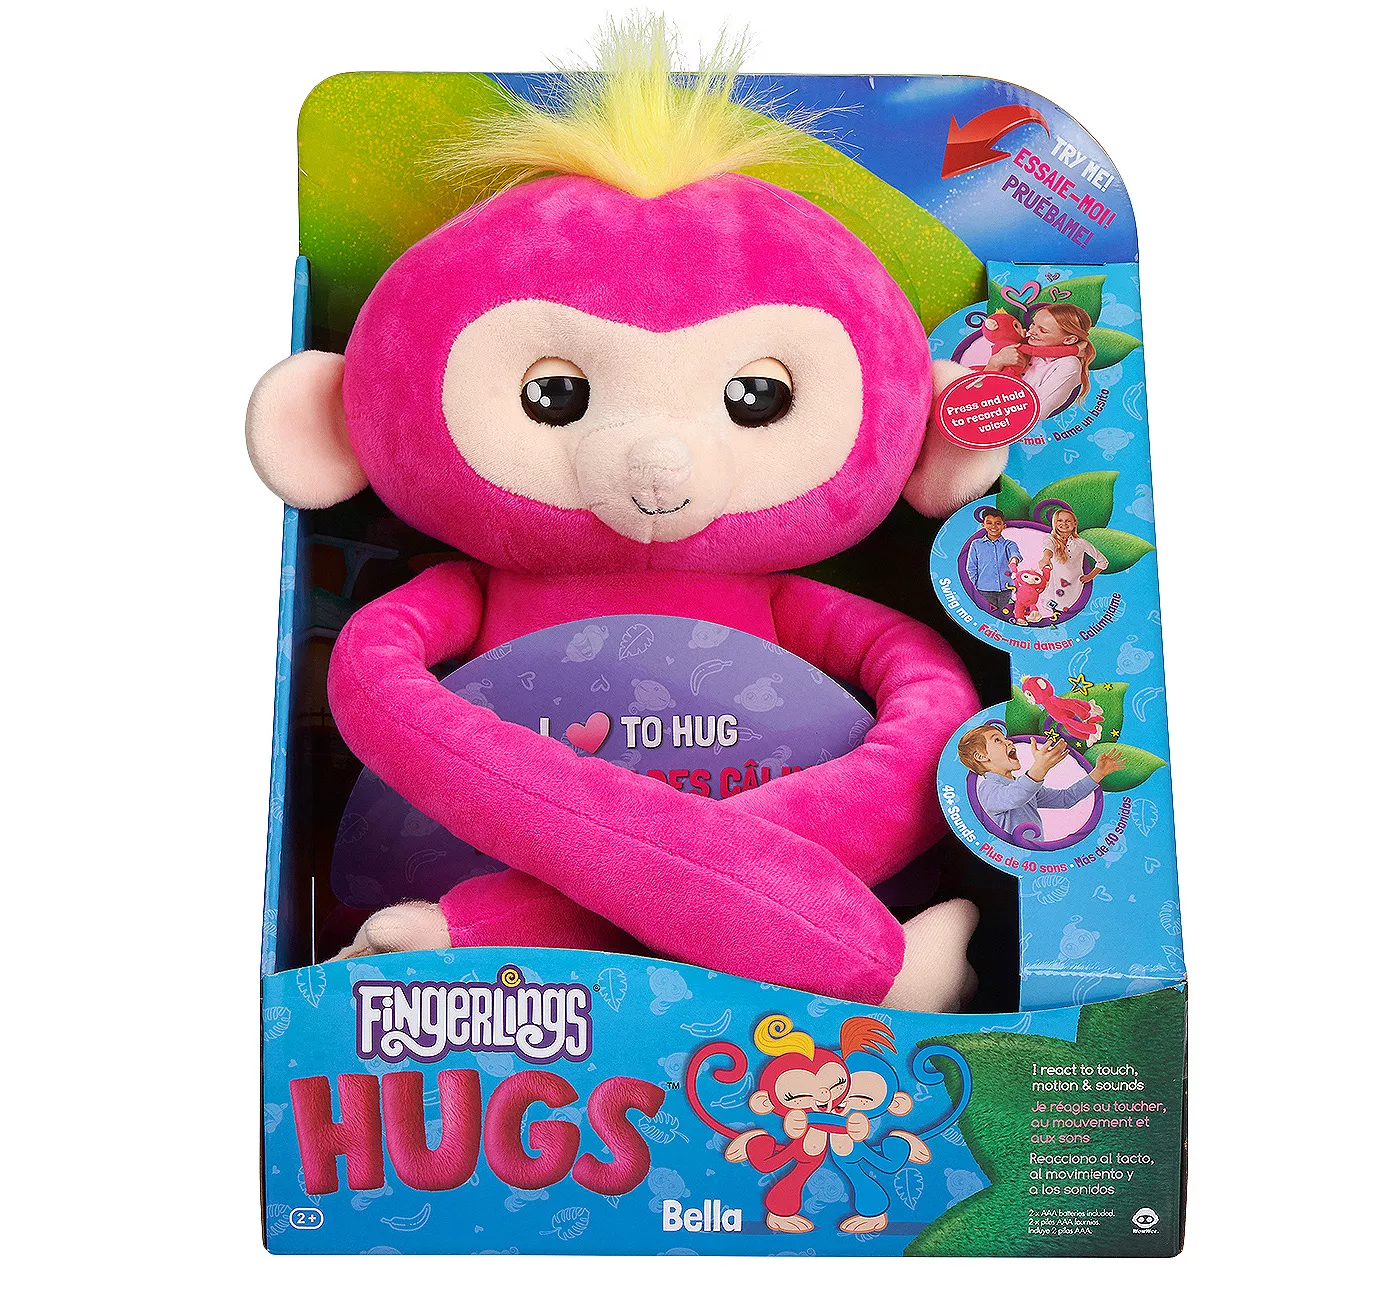 Fingerlings HUGS - Bella - Friendly Interactive Plush Monkey - Pink - image 11 of 11